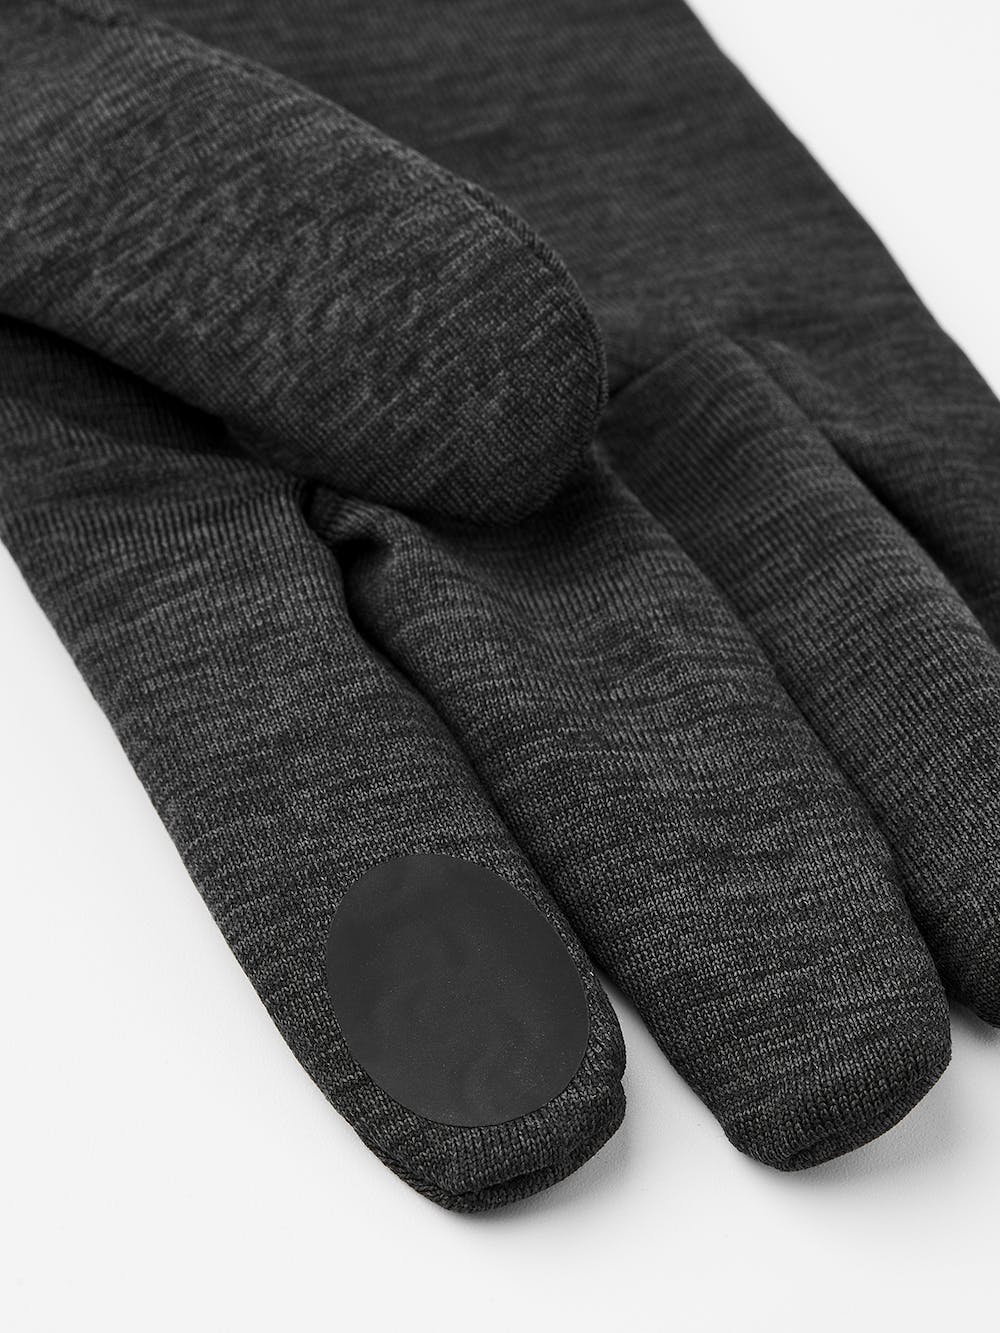 Hestra Men's Tactility Heat Liner Glove